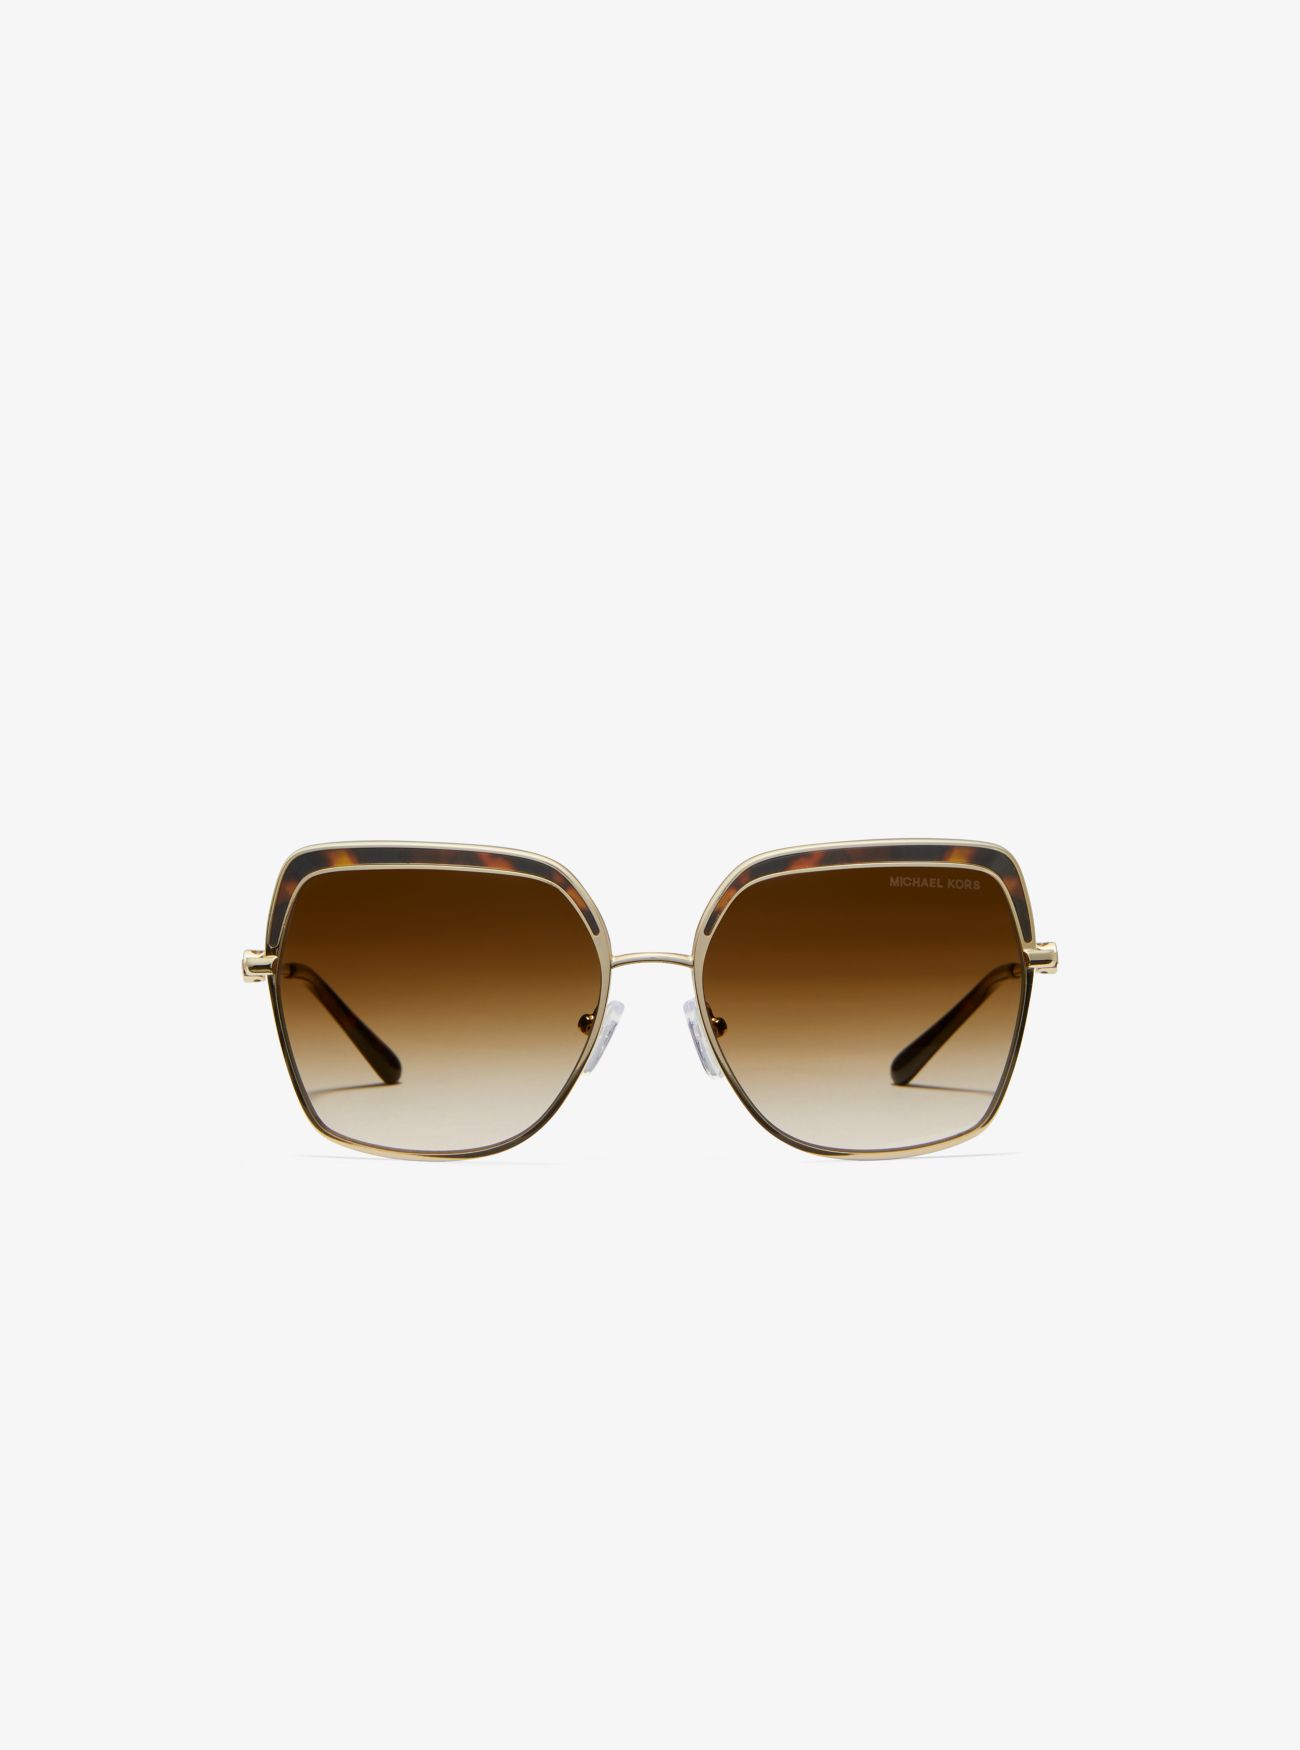 MK Greenpoint Sunglasses - Tortoise - Michael Kors